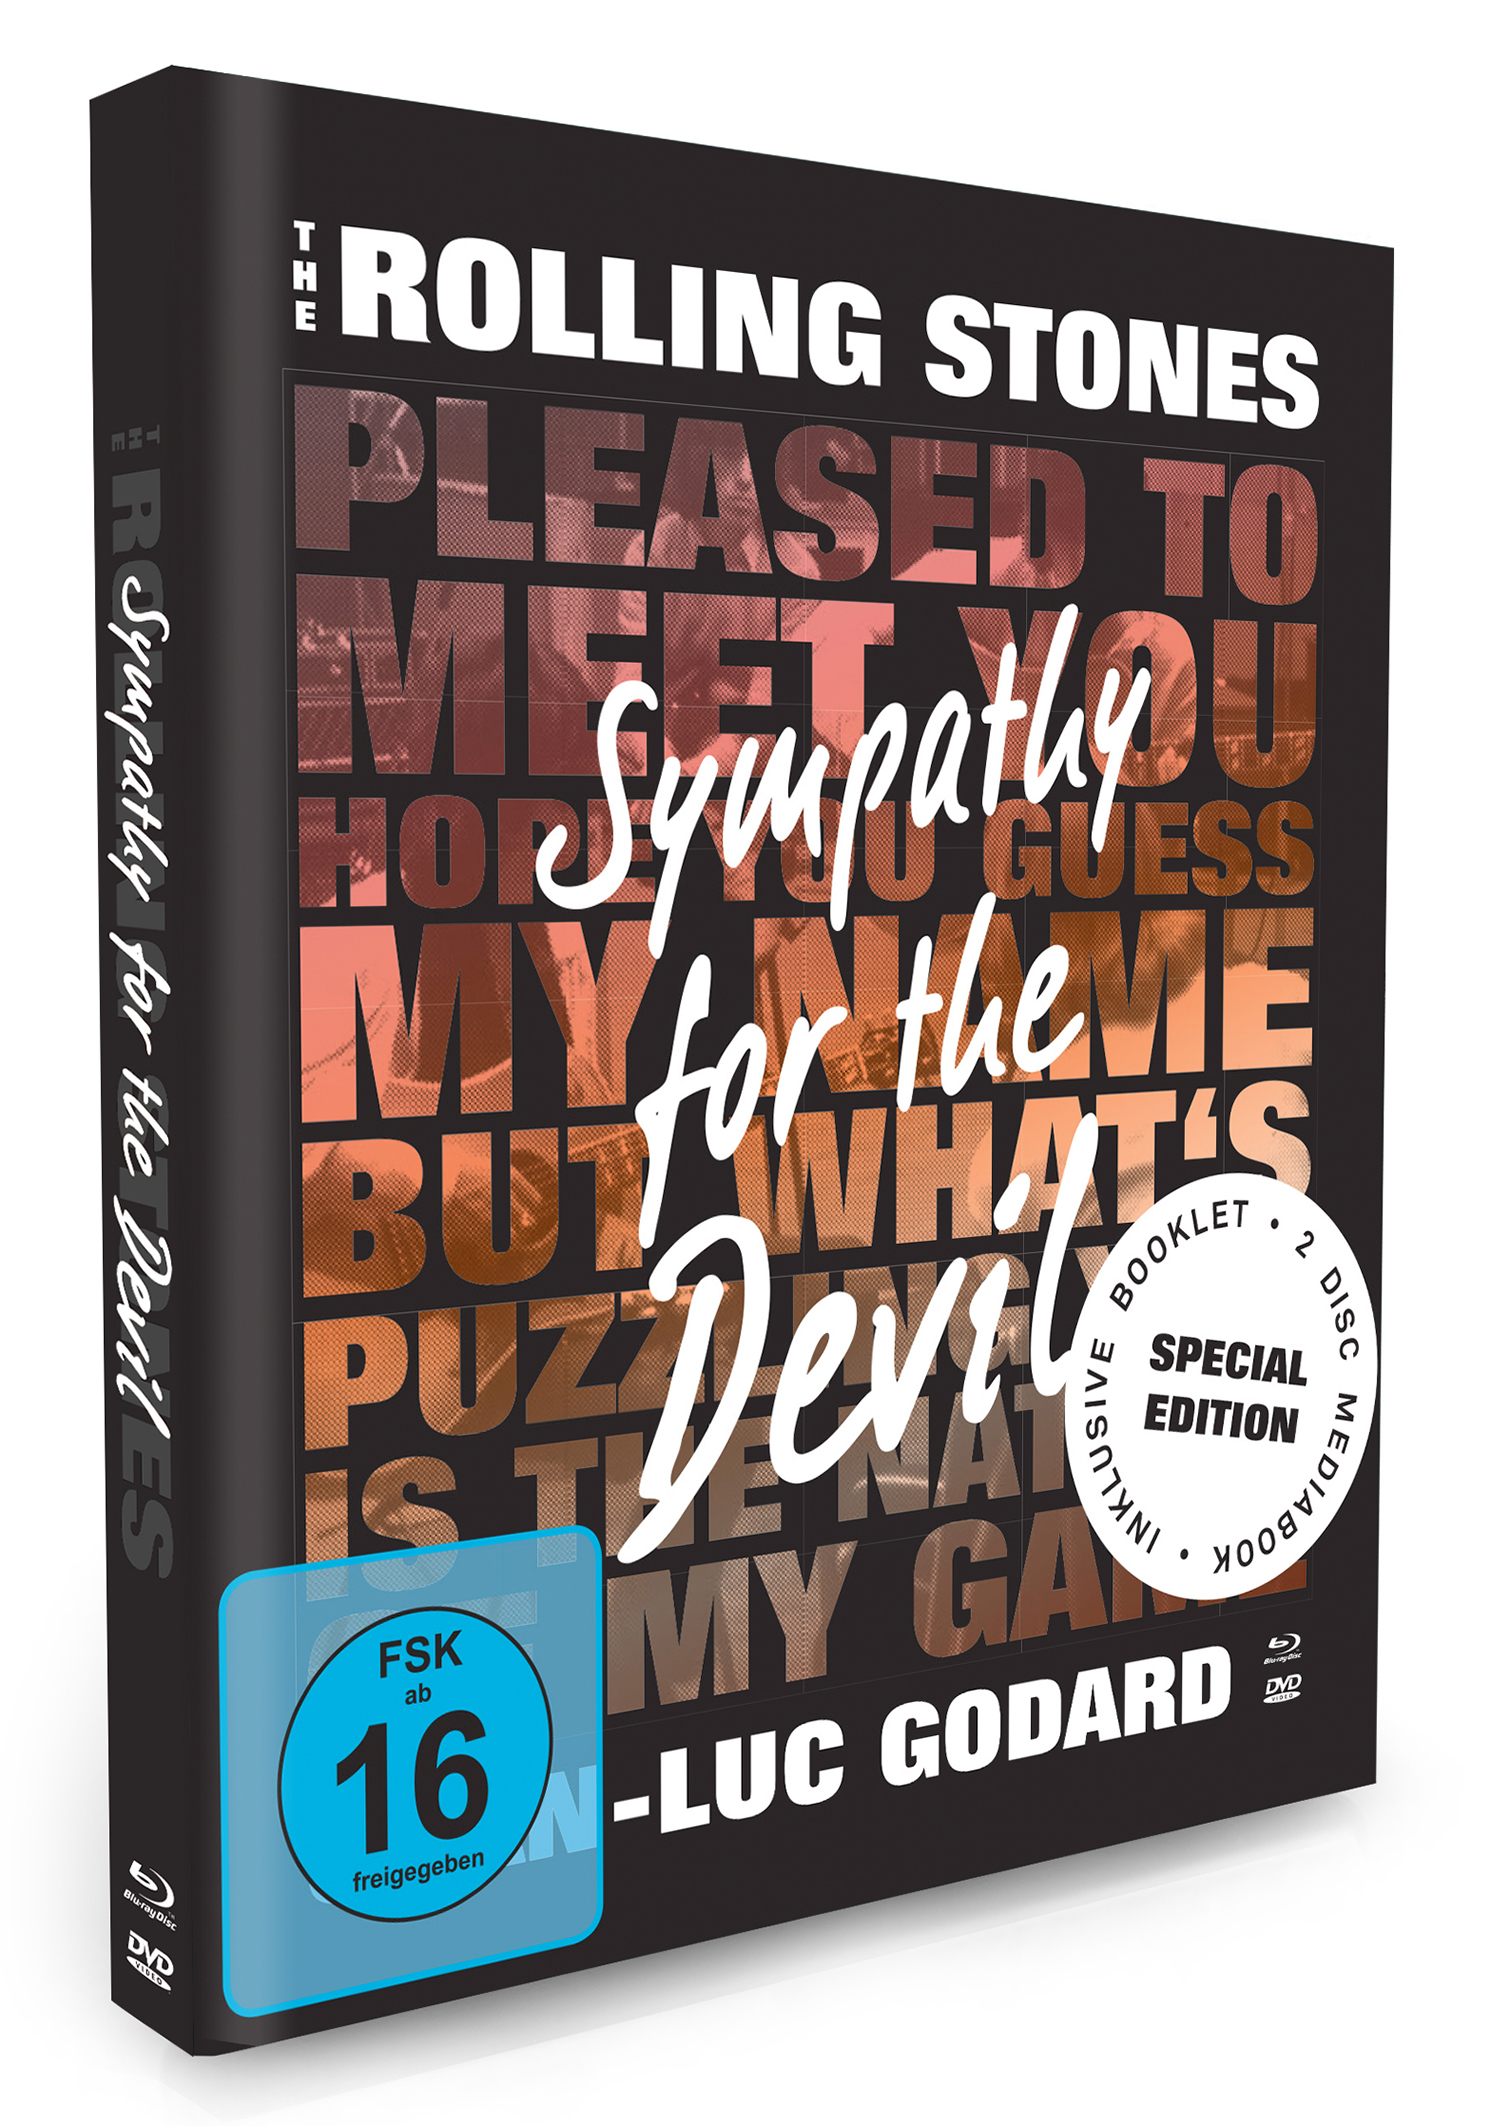 Rolling Stones: The Sympathy The DVD (Mediabook) For Devil